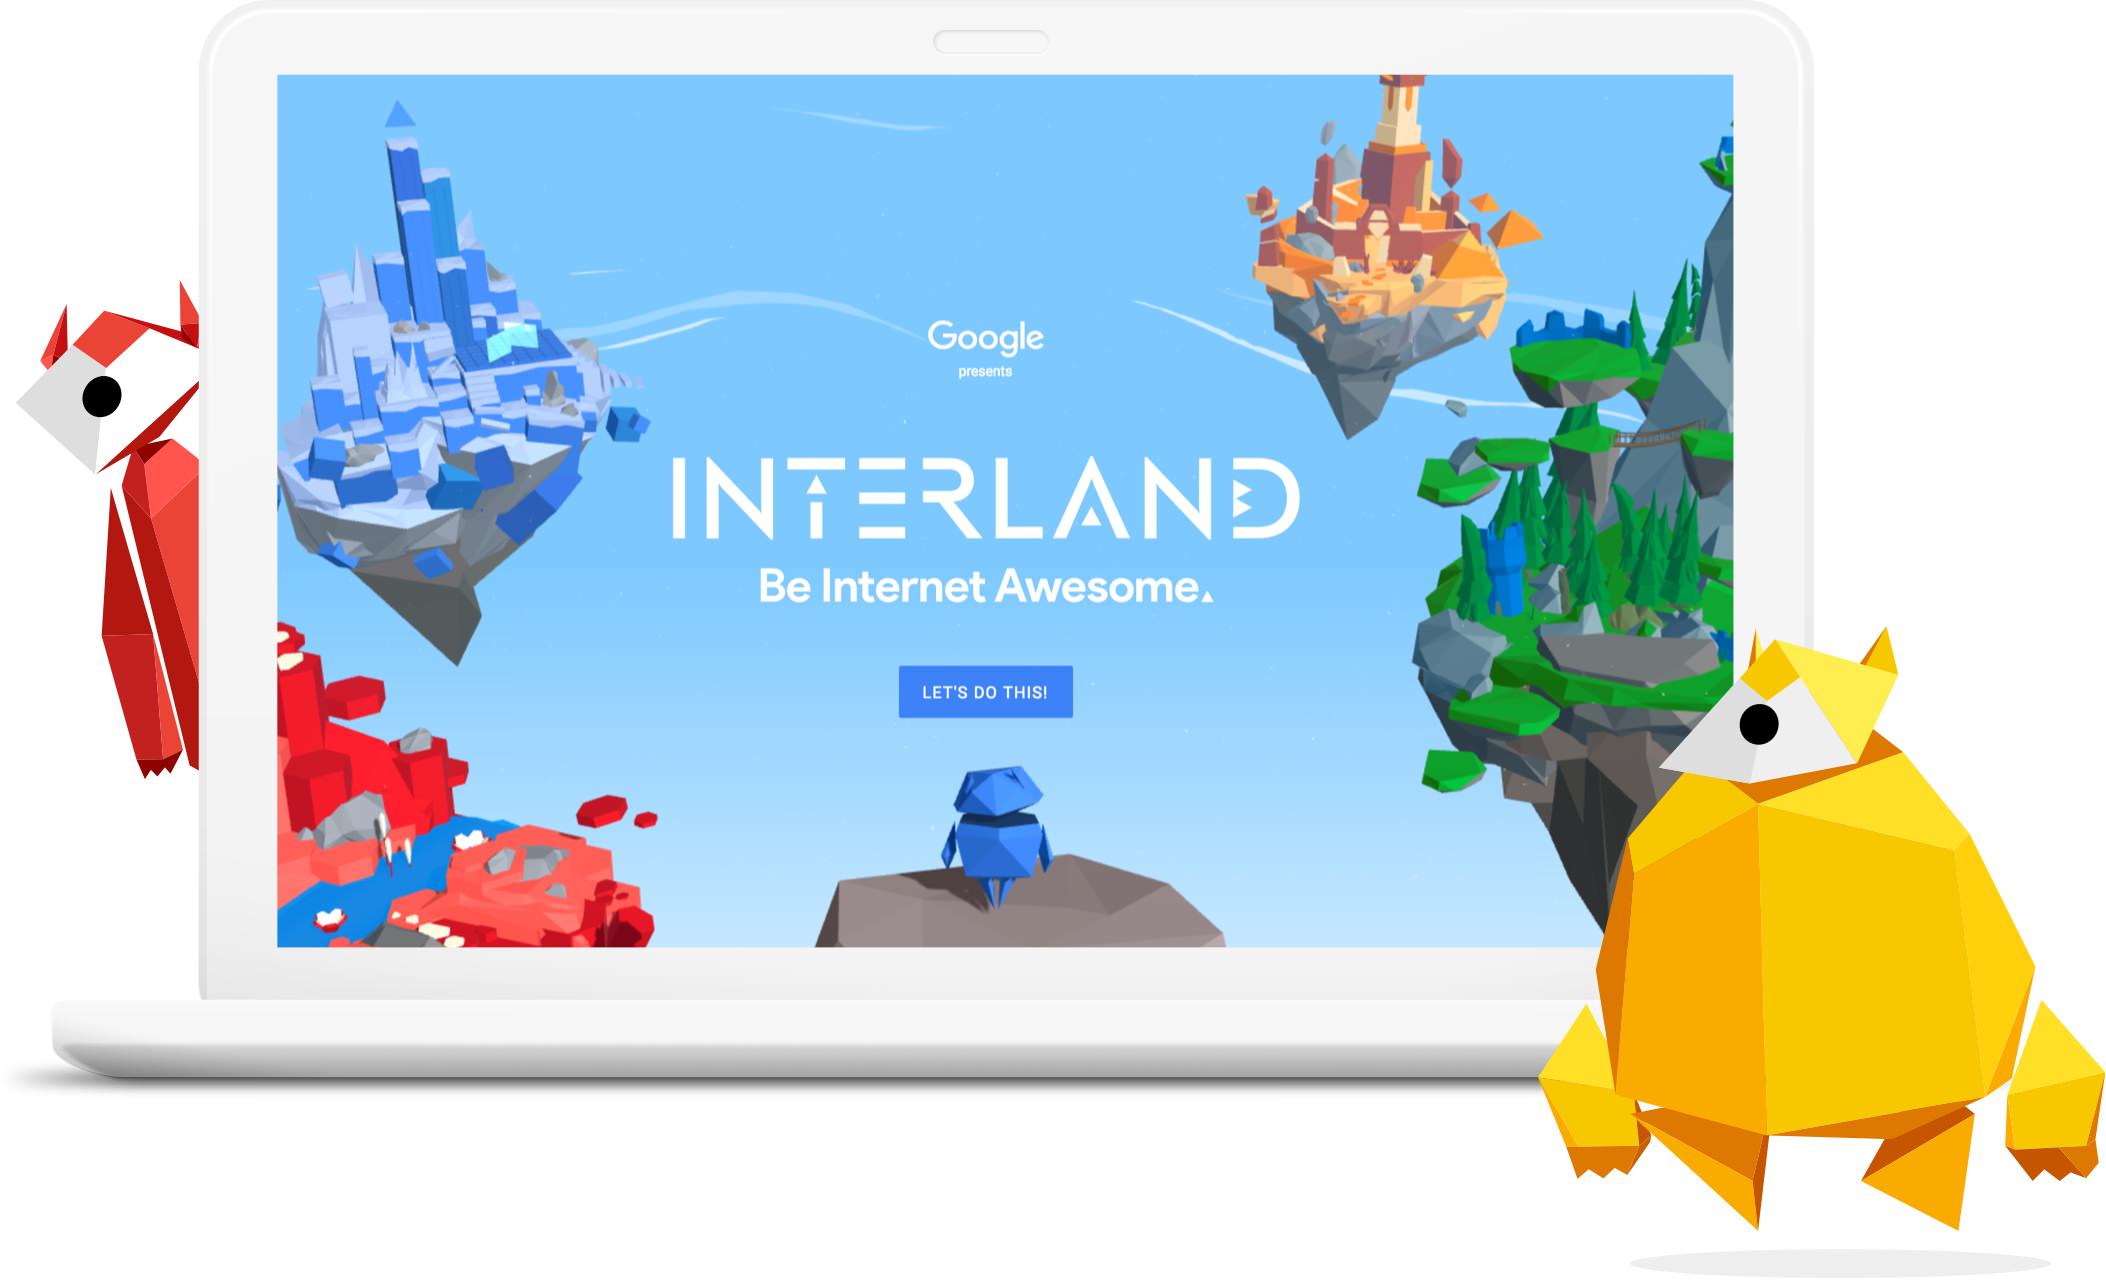 Google Interland: Be Internet Awesome